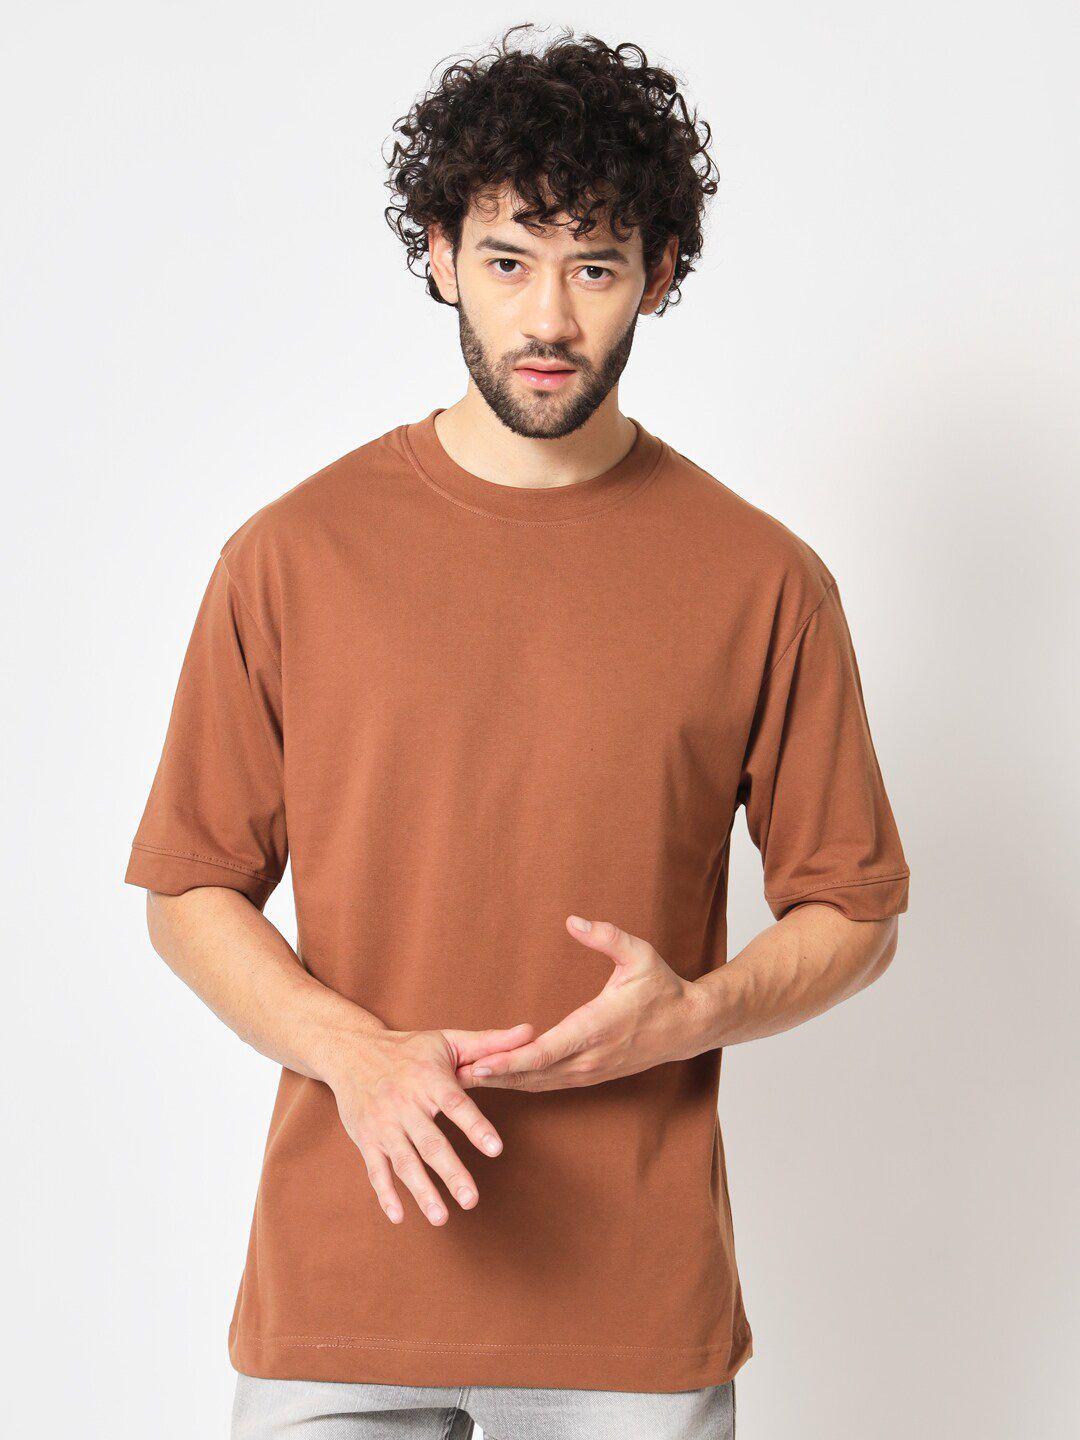 imsa moda men coffee brown v-neck loose t-shirt